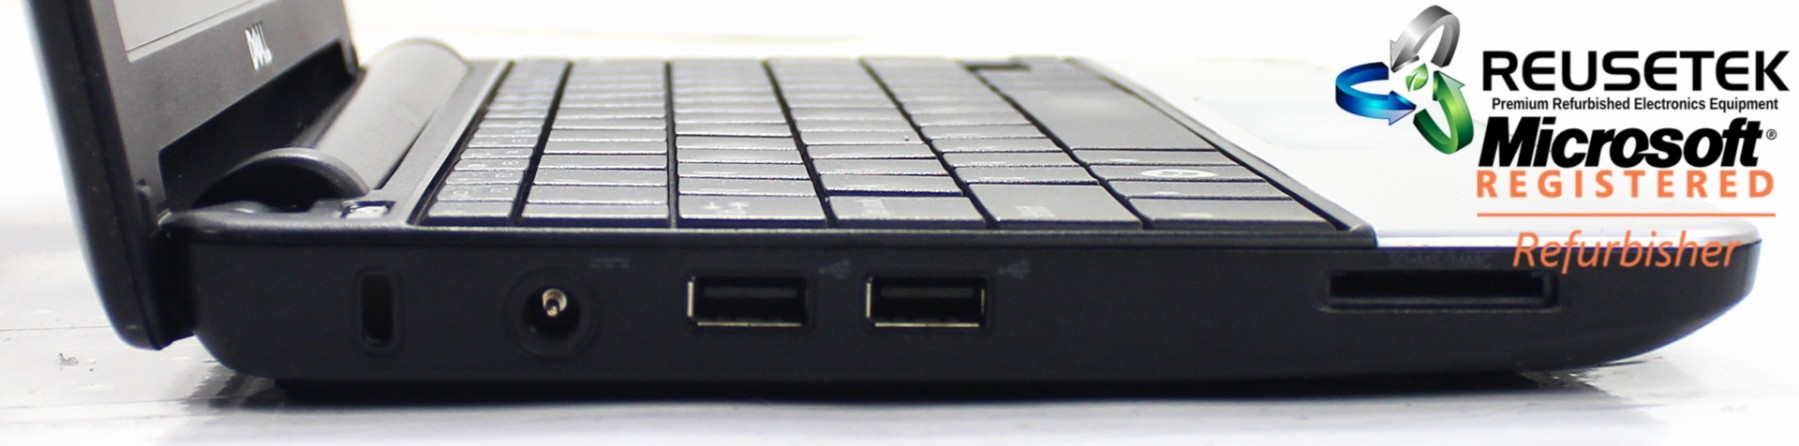 500031218-Dell Inspiron Mini 10 PP19S 10.1" Netbook-image